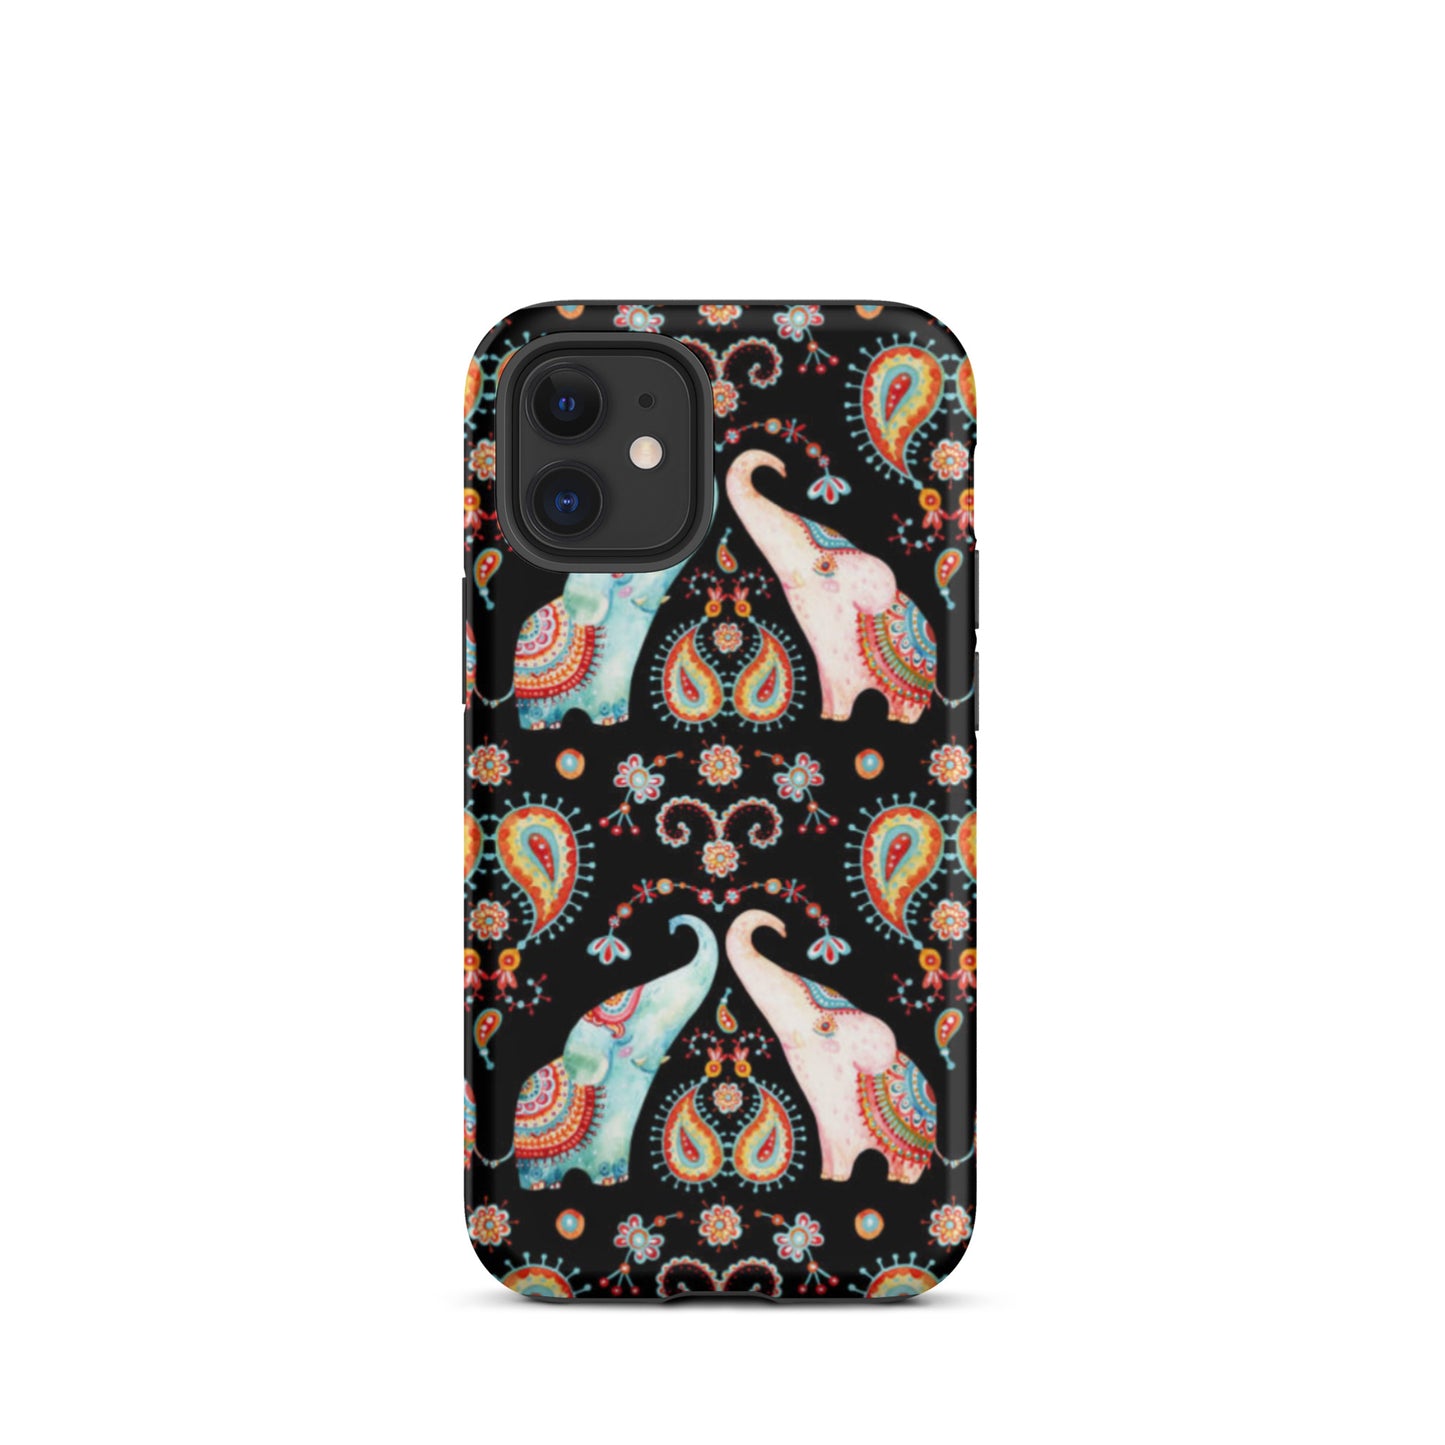 Indian Elephants Tough iPhone 12 mini case